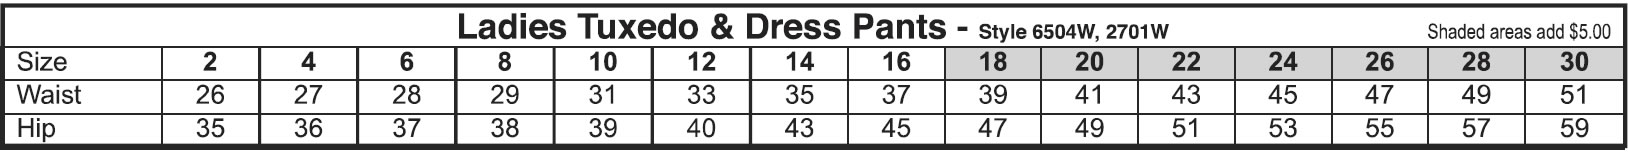 Ladies Tuxedo & Dress Pants Size Chart